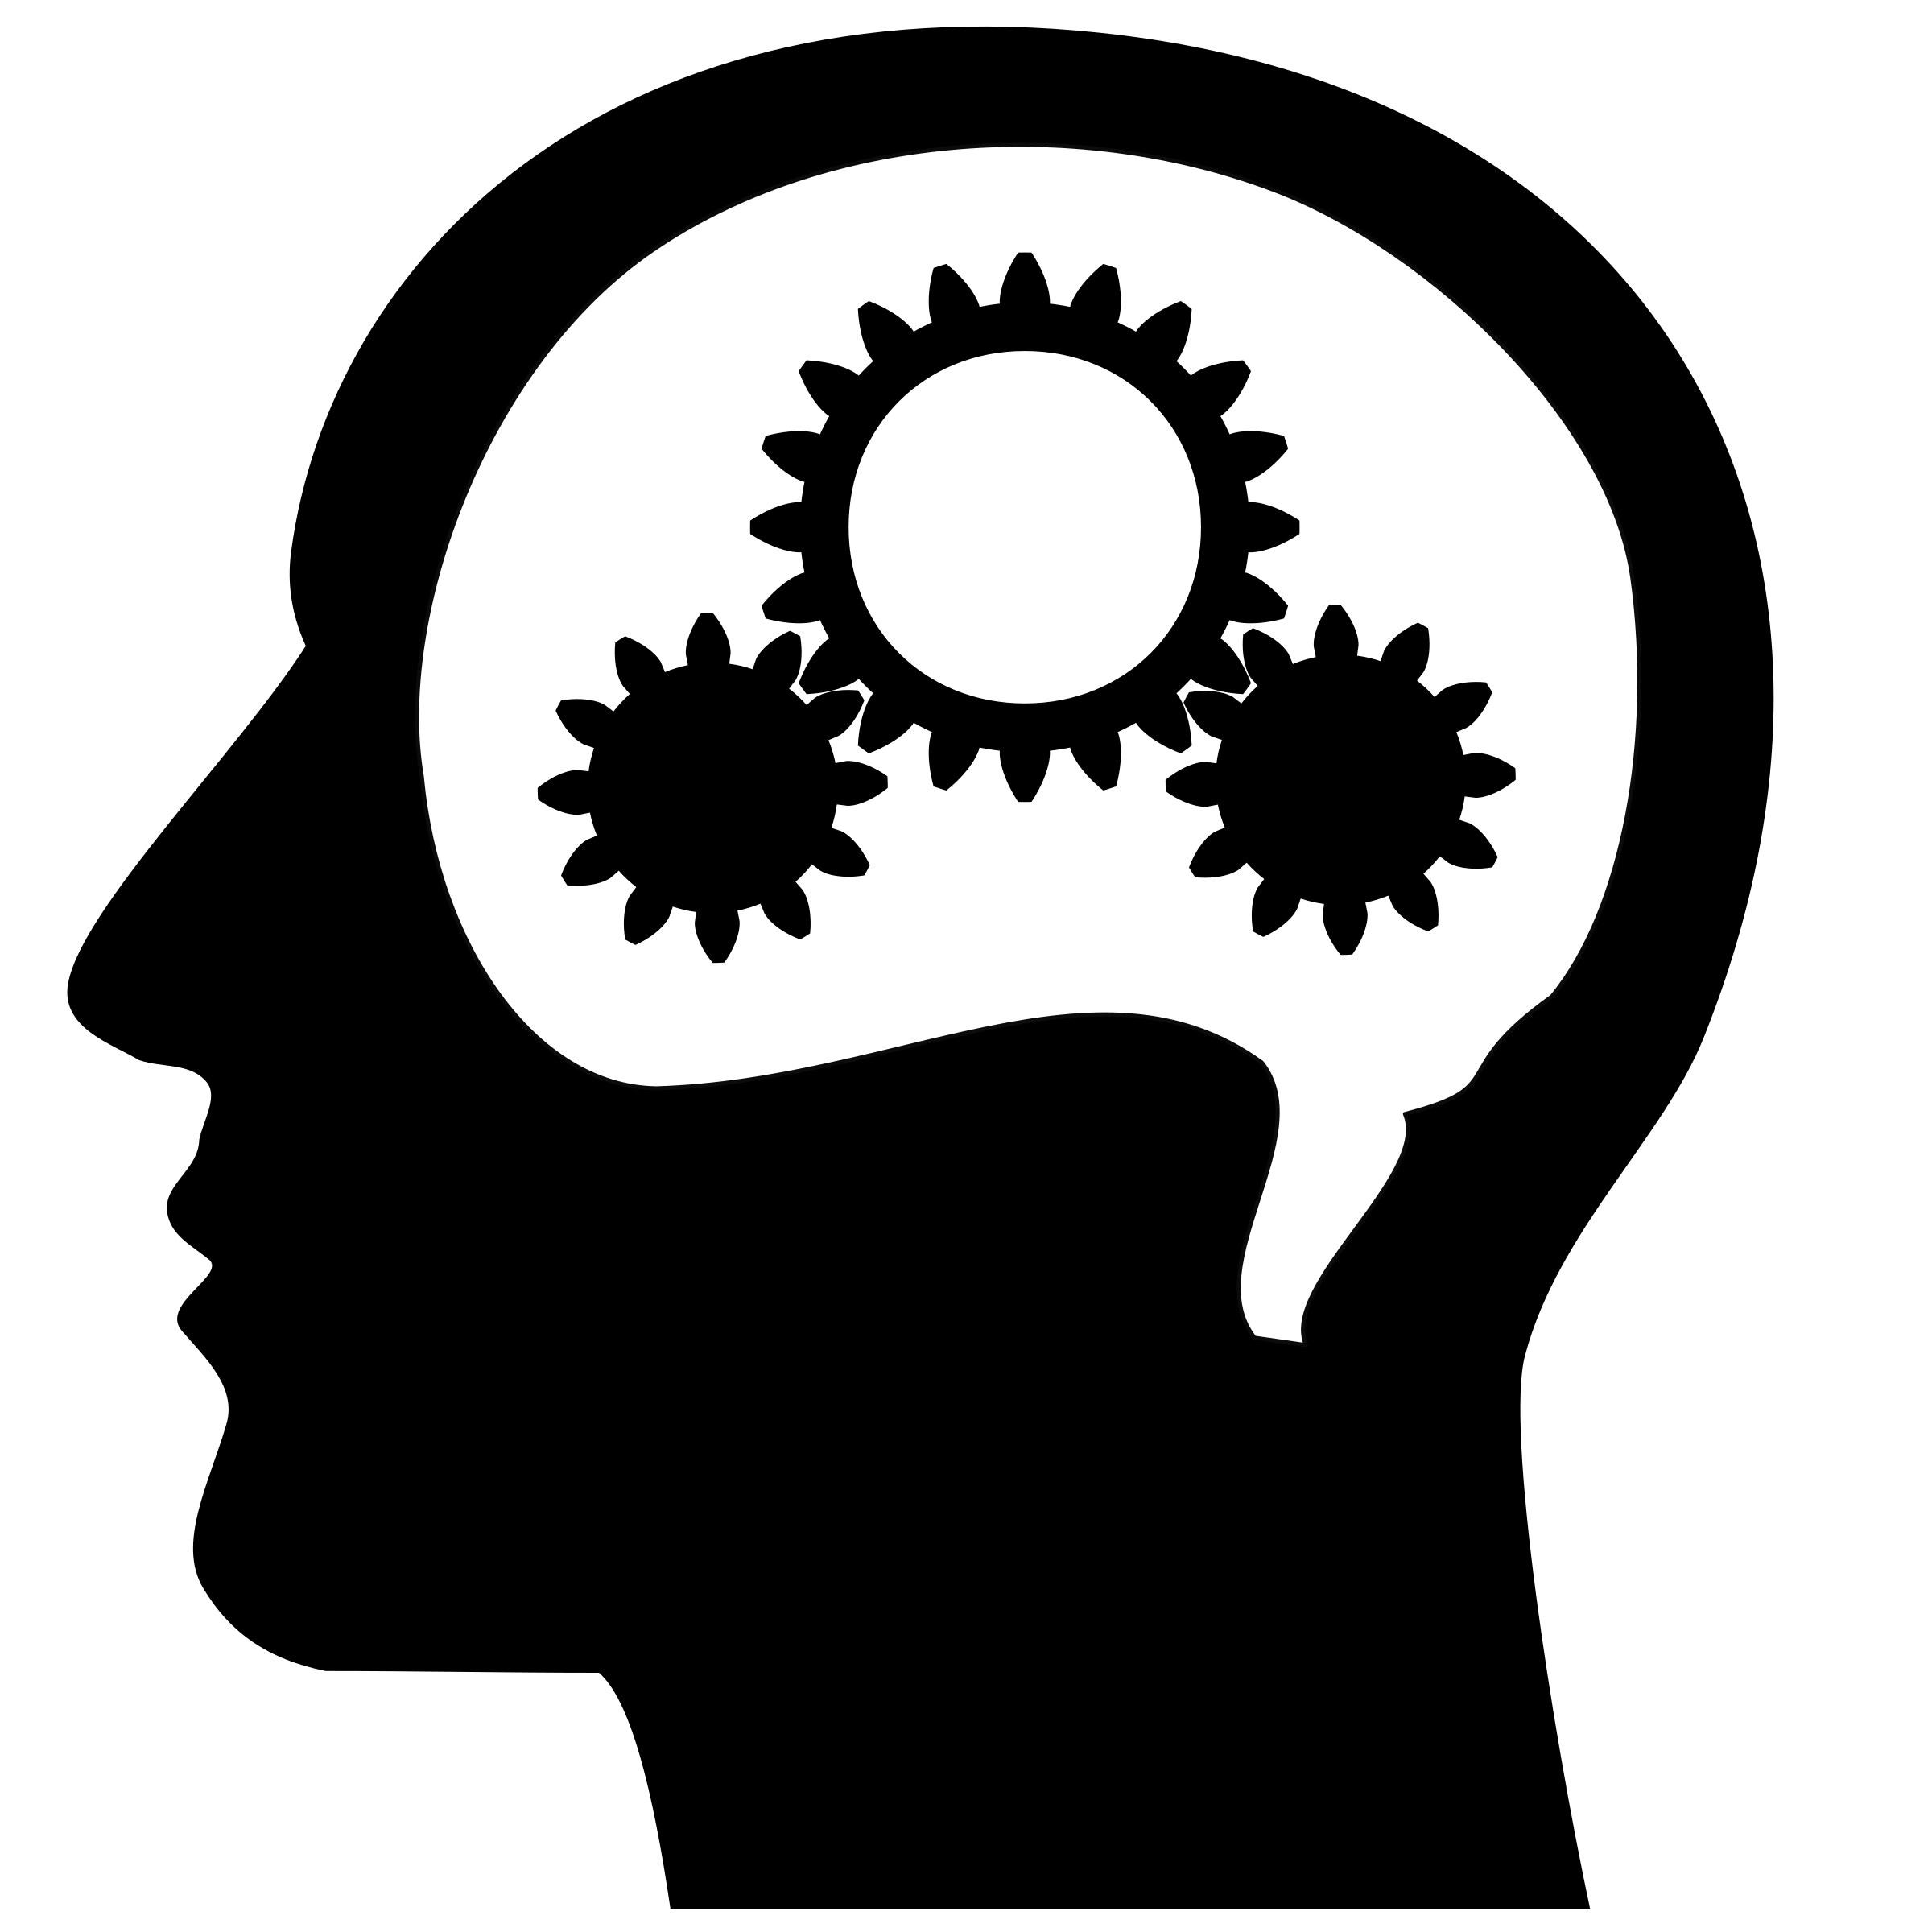 Thinking brain machine vector clipart image